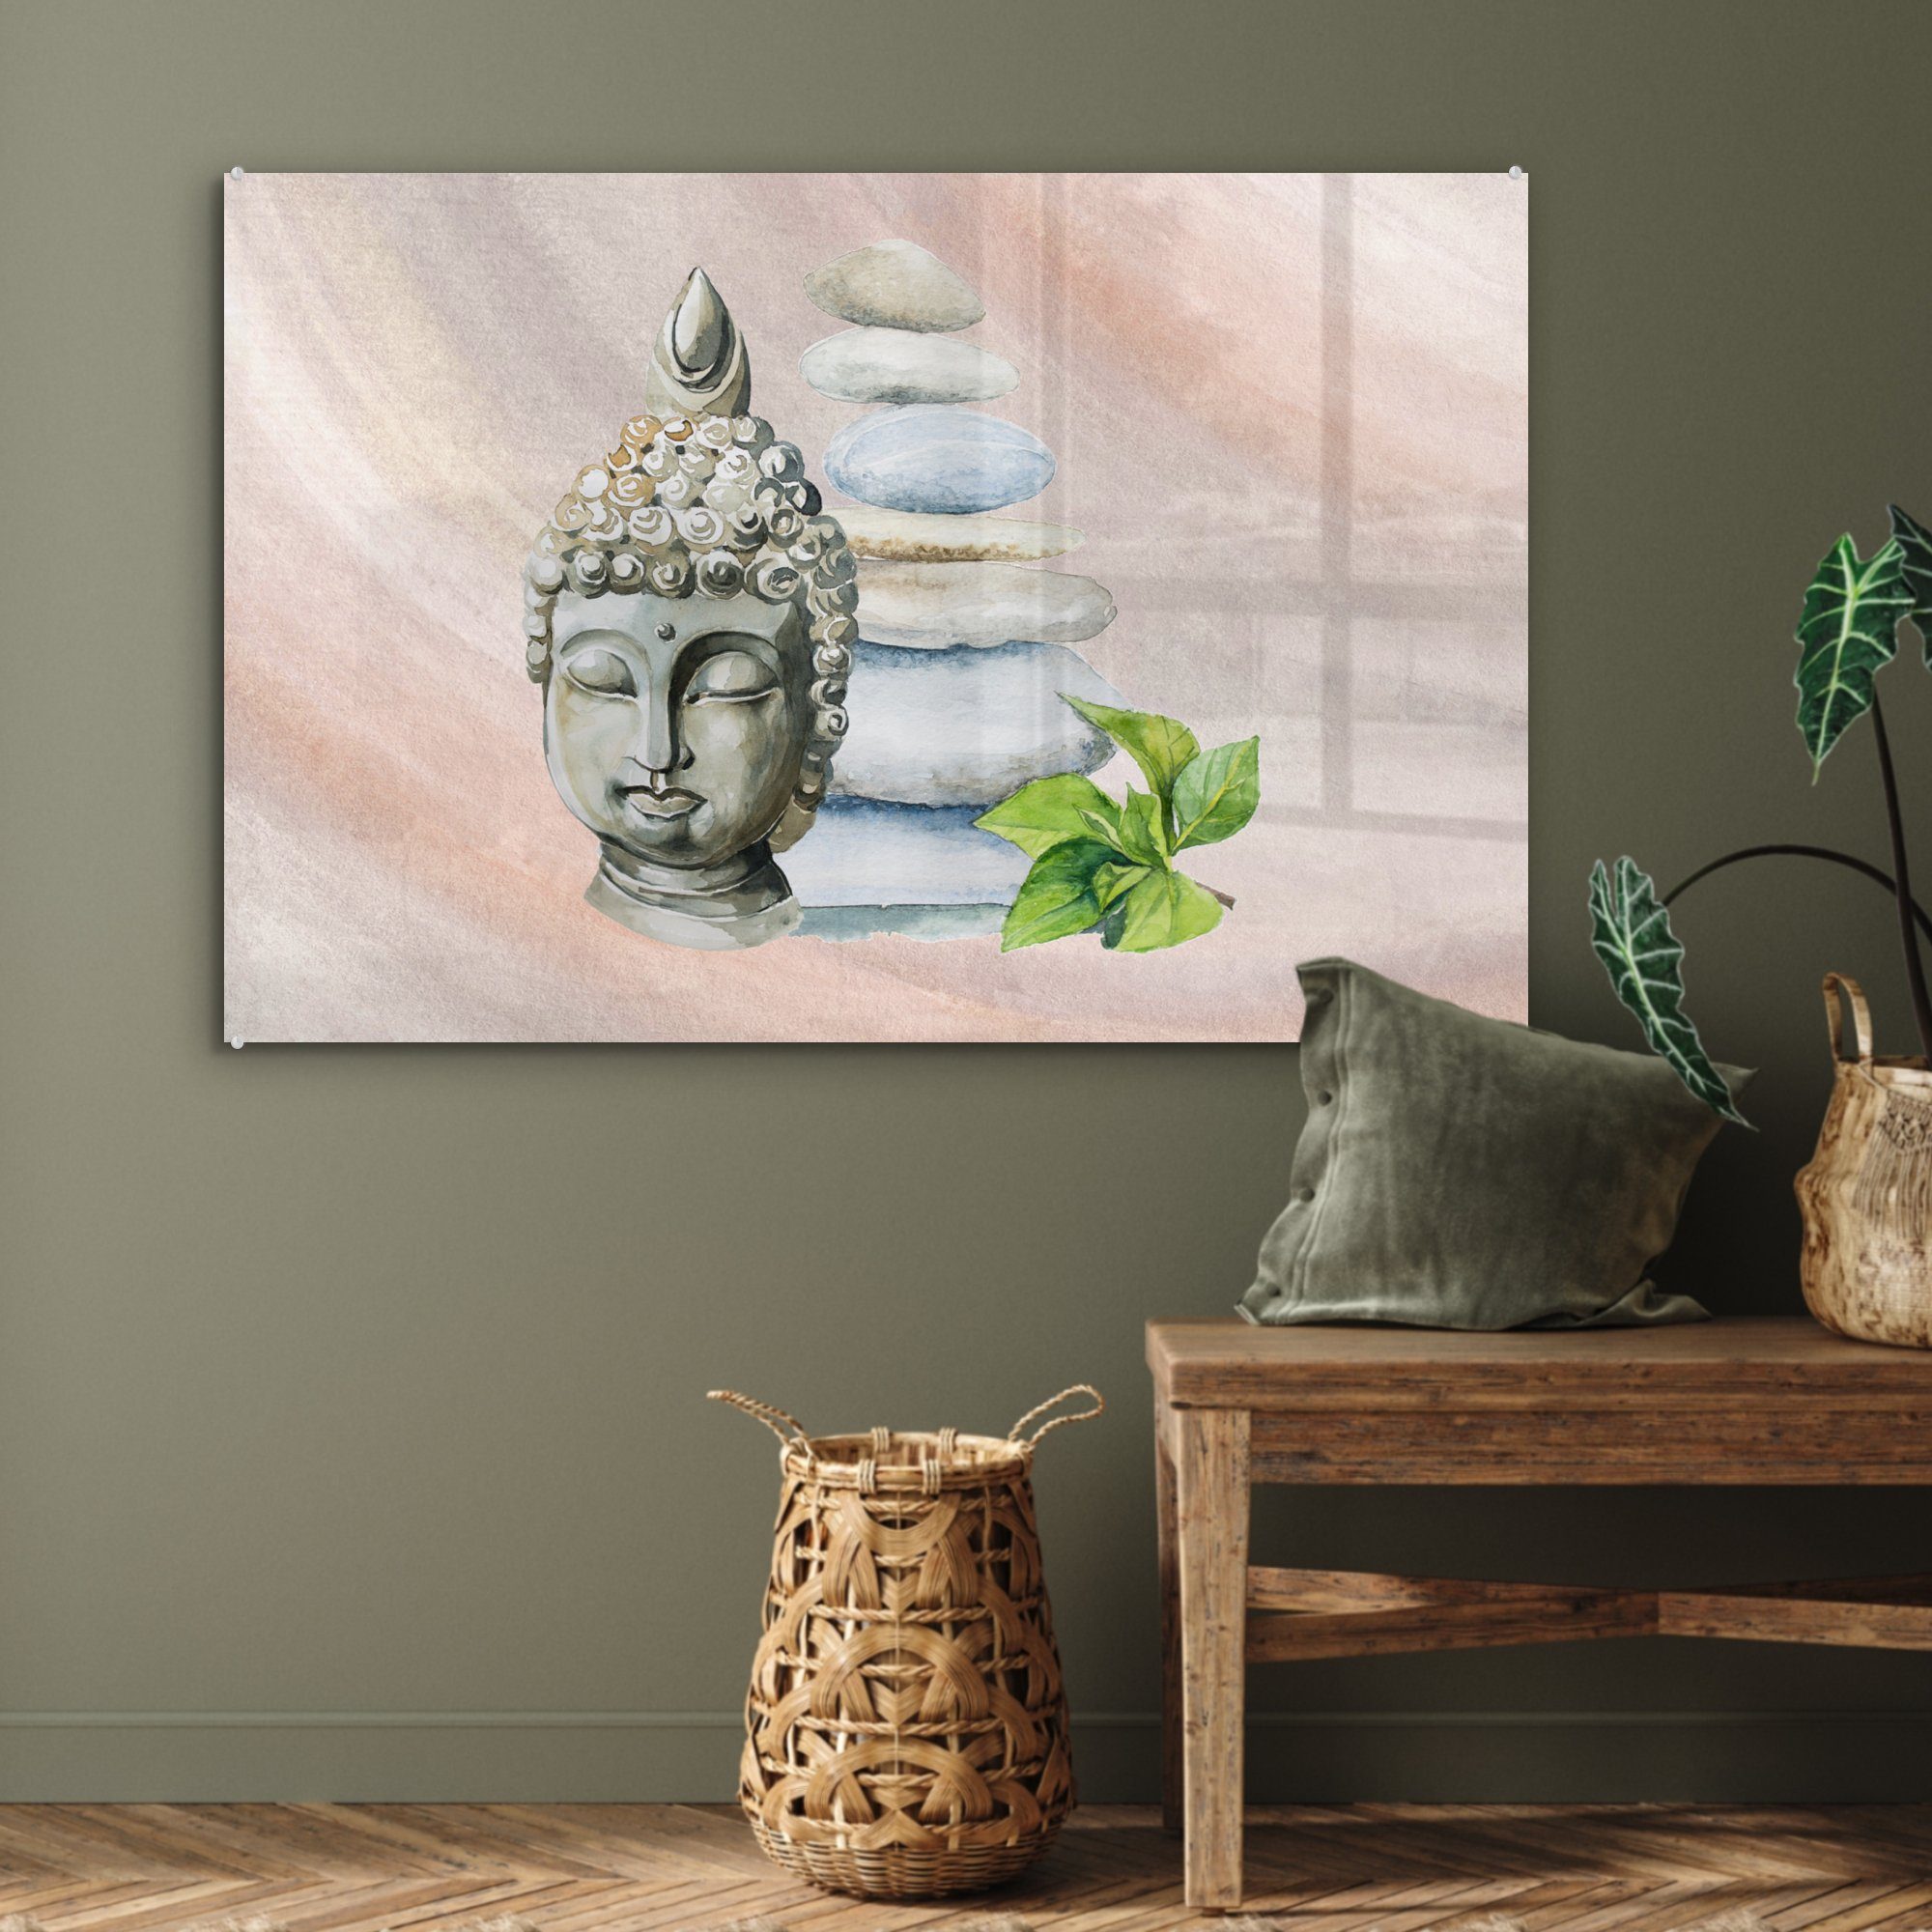 - Acrylglasbilder (1 - Buddha Acrylglasbild Kopf Wohnzimmer & Schlafzimmer MuchoWow Fels, St),